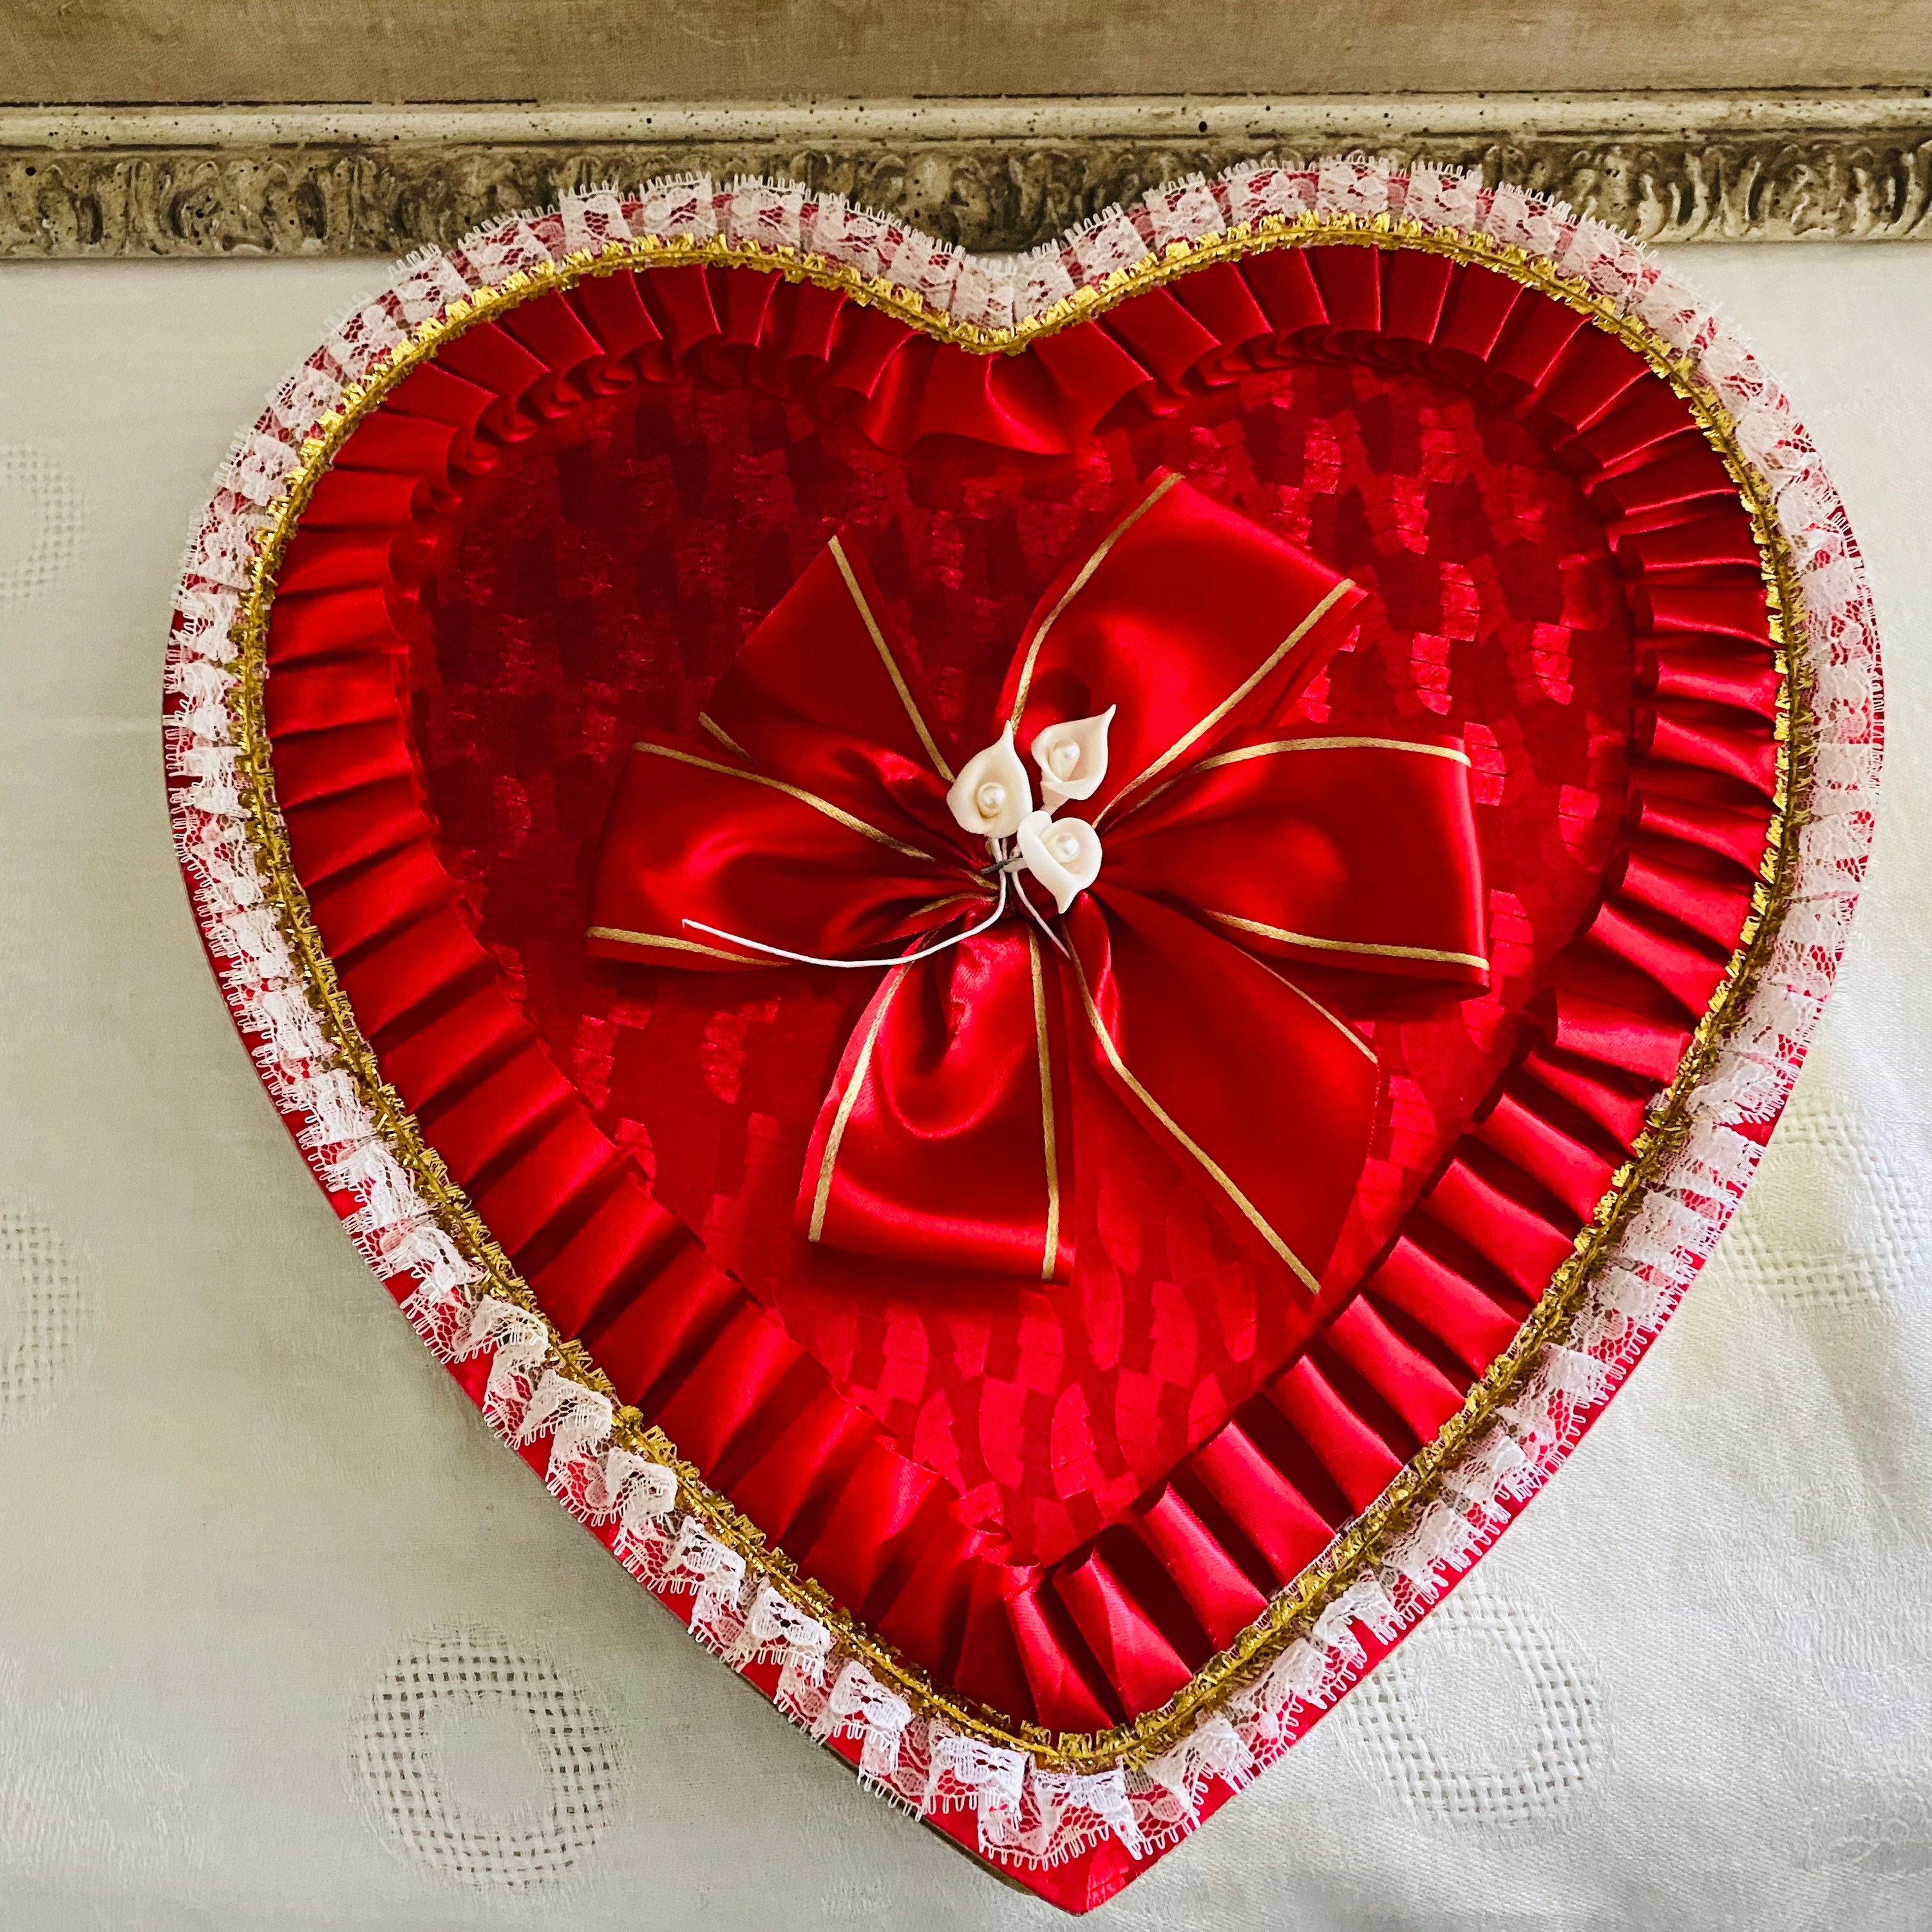 1968 Brachs pure chocolate candy be my Valentine vintage heart box